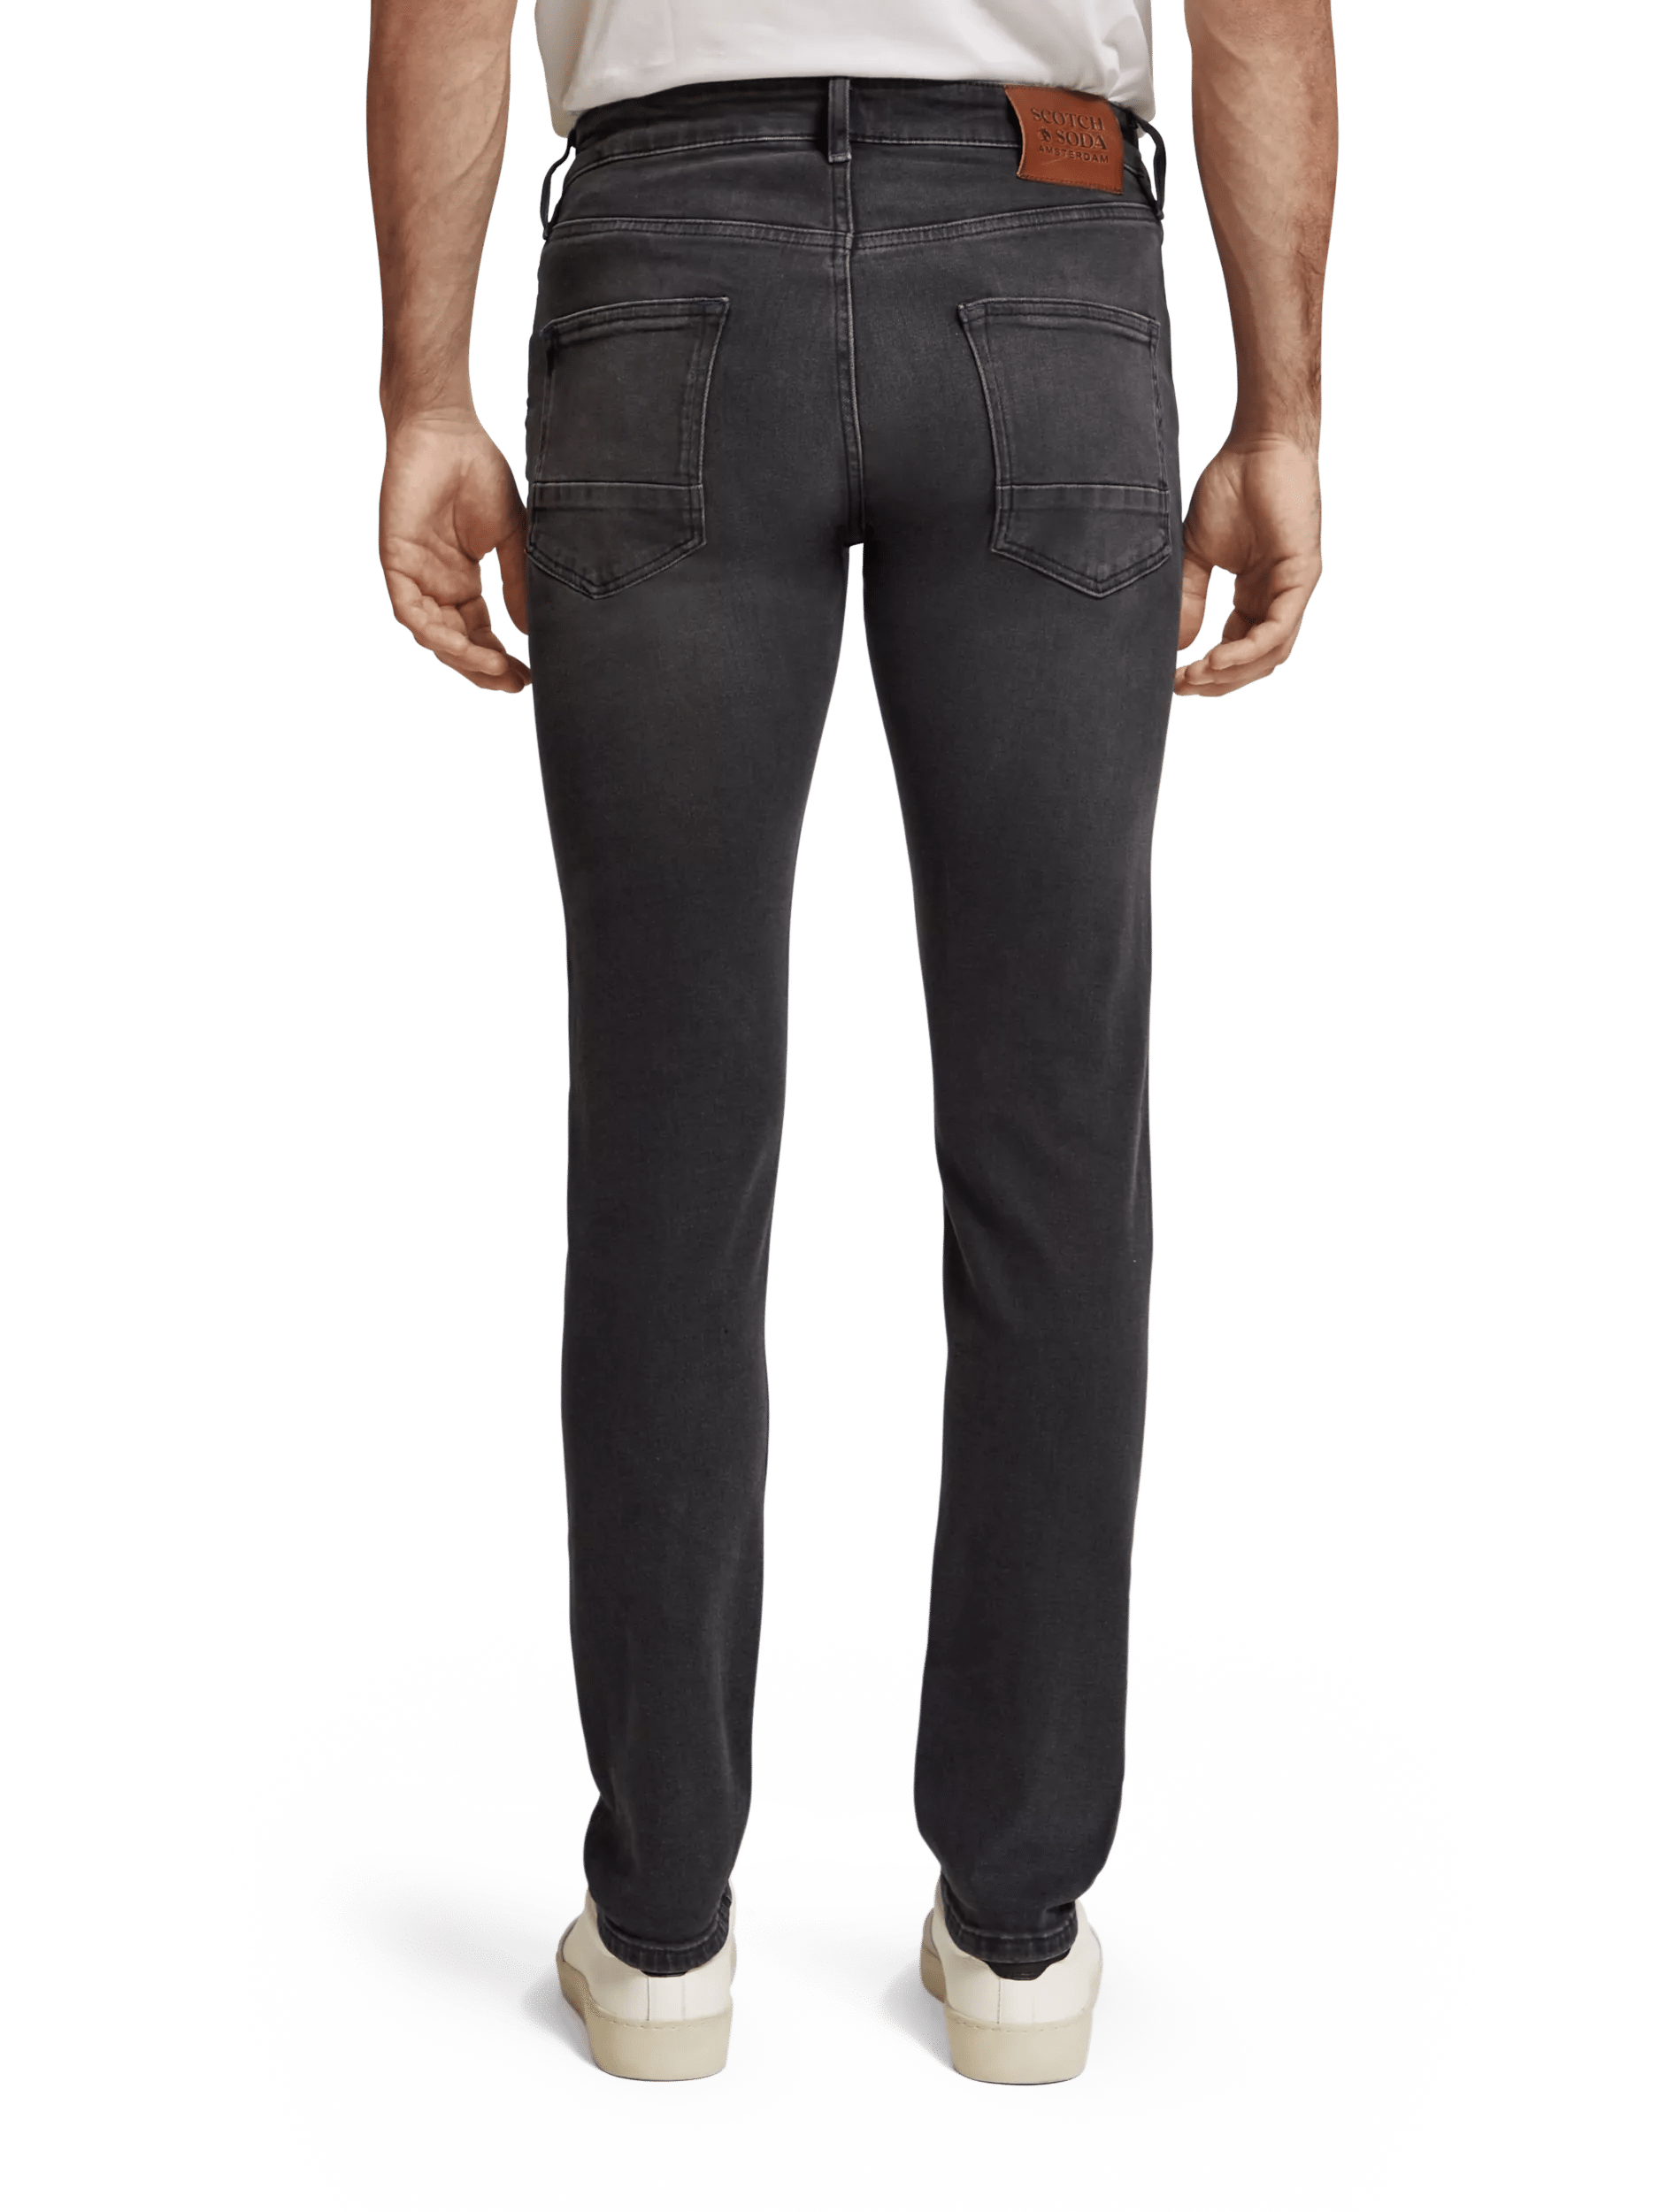 The Ralston regular slim fit jeans